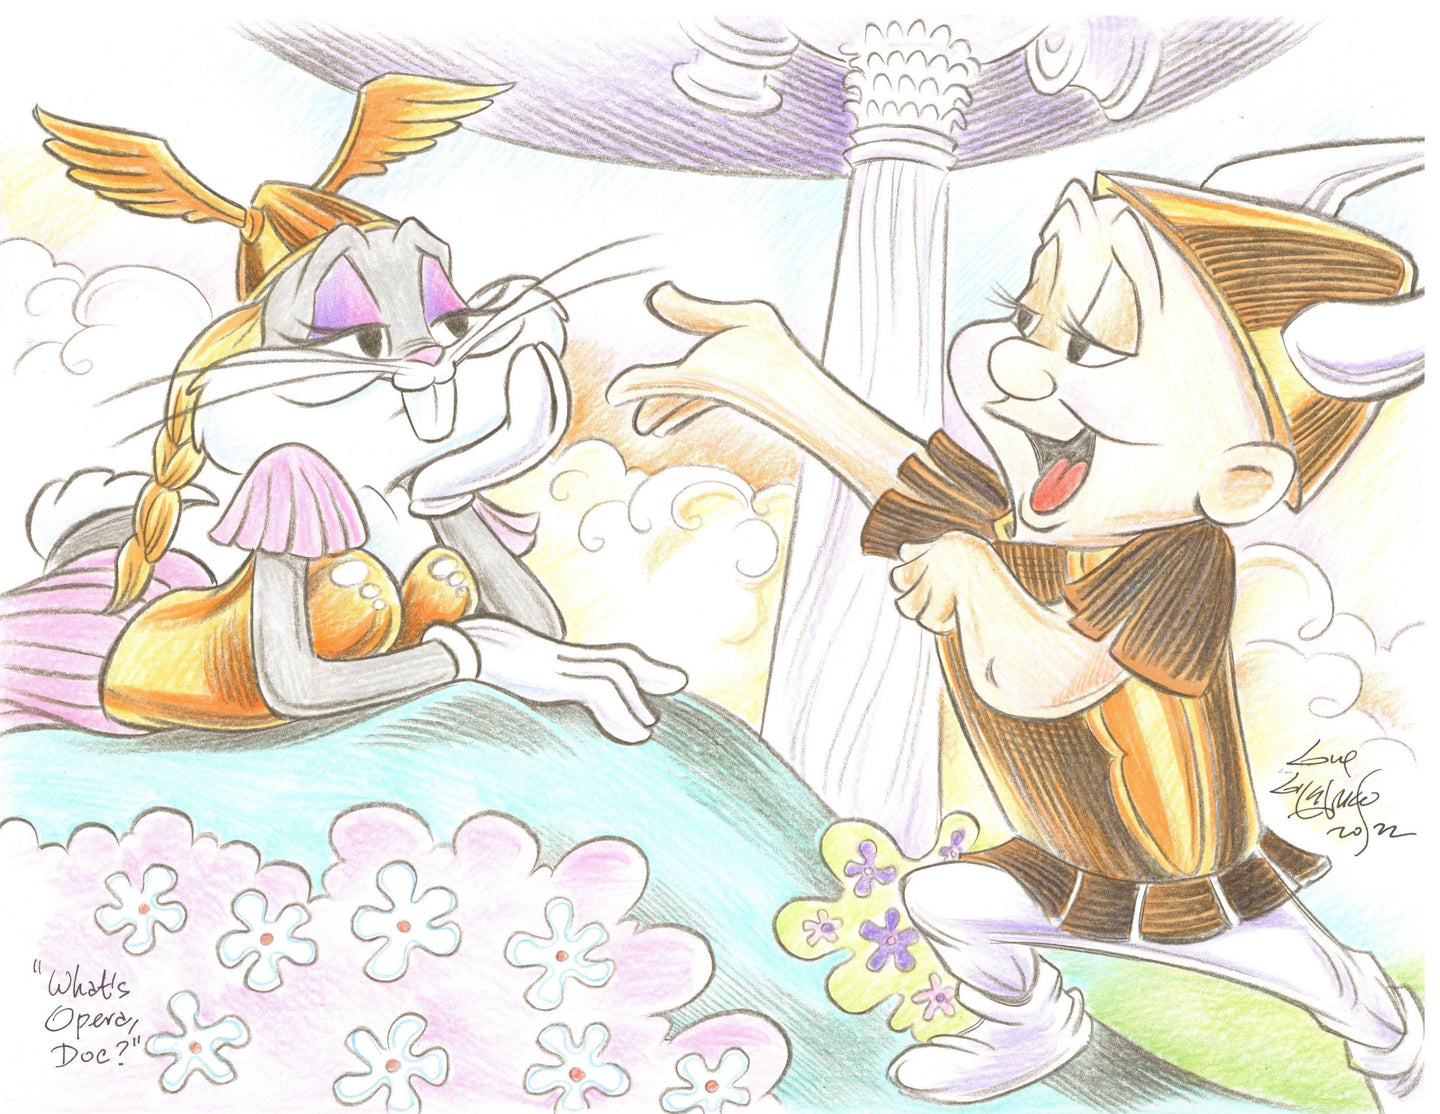 Bugs Bunny & Elmer Fudd Original Art 8.5x11 Sketch - Created by Guy Gilchrist